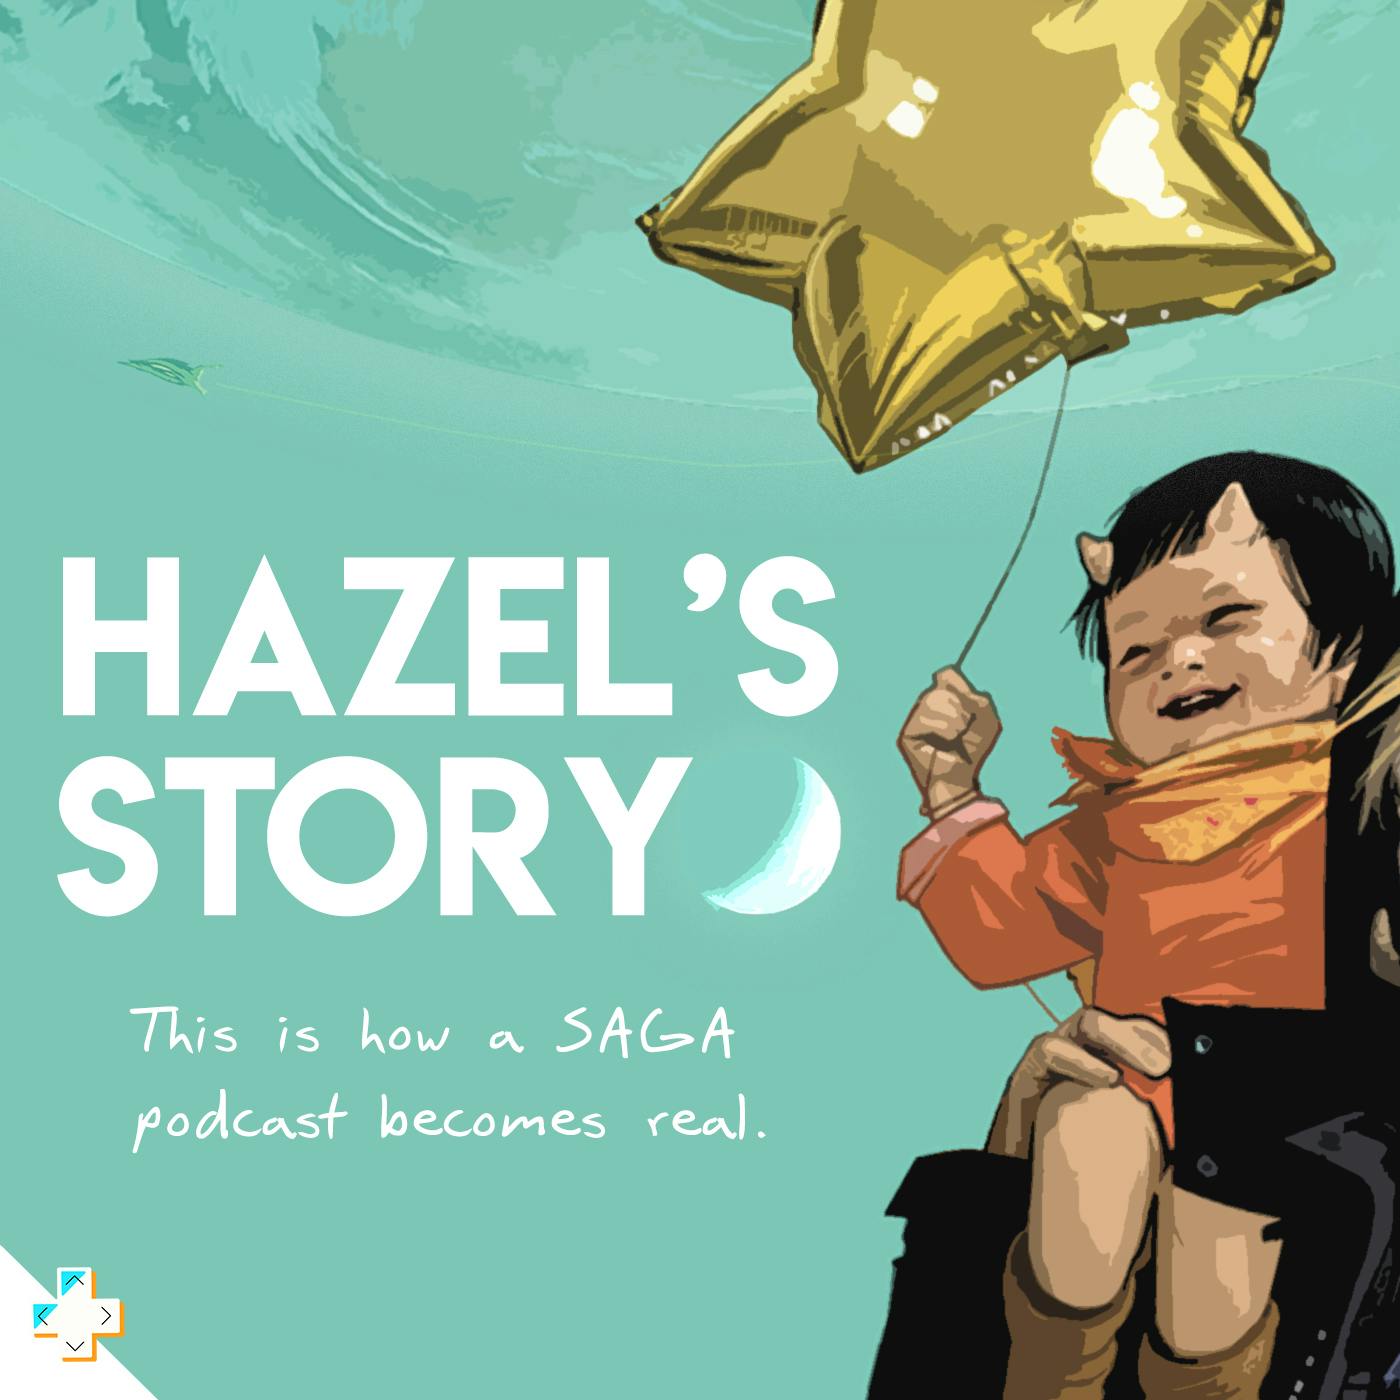 Introducing Hazel's Story